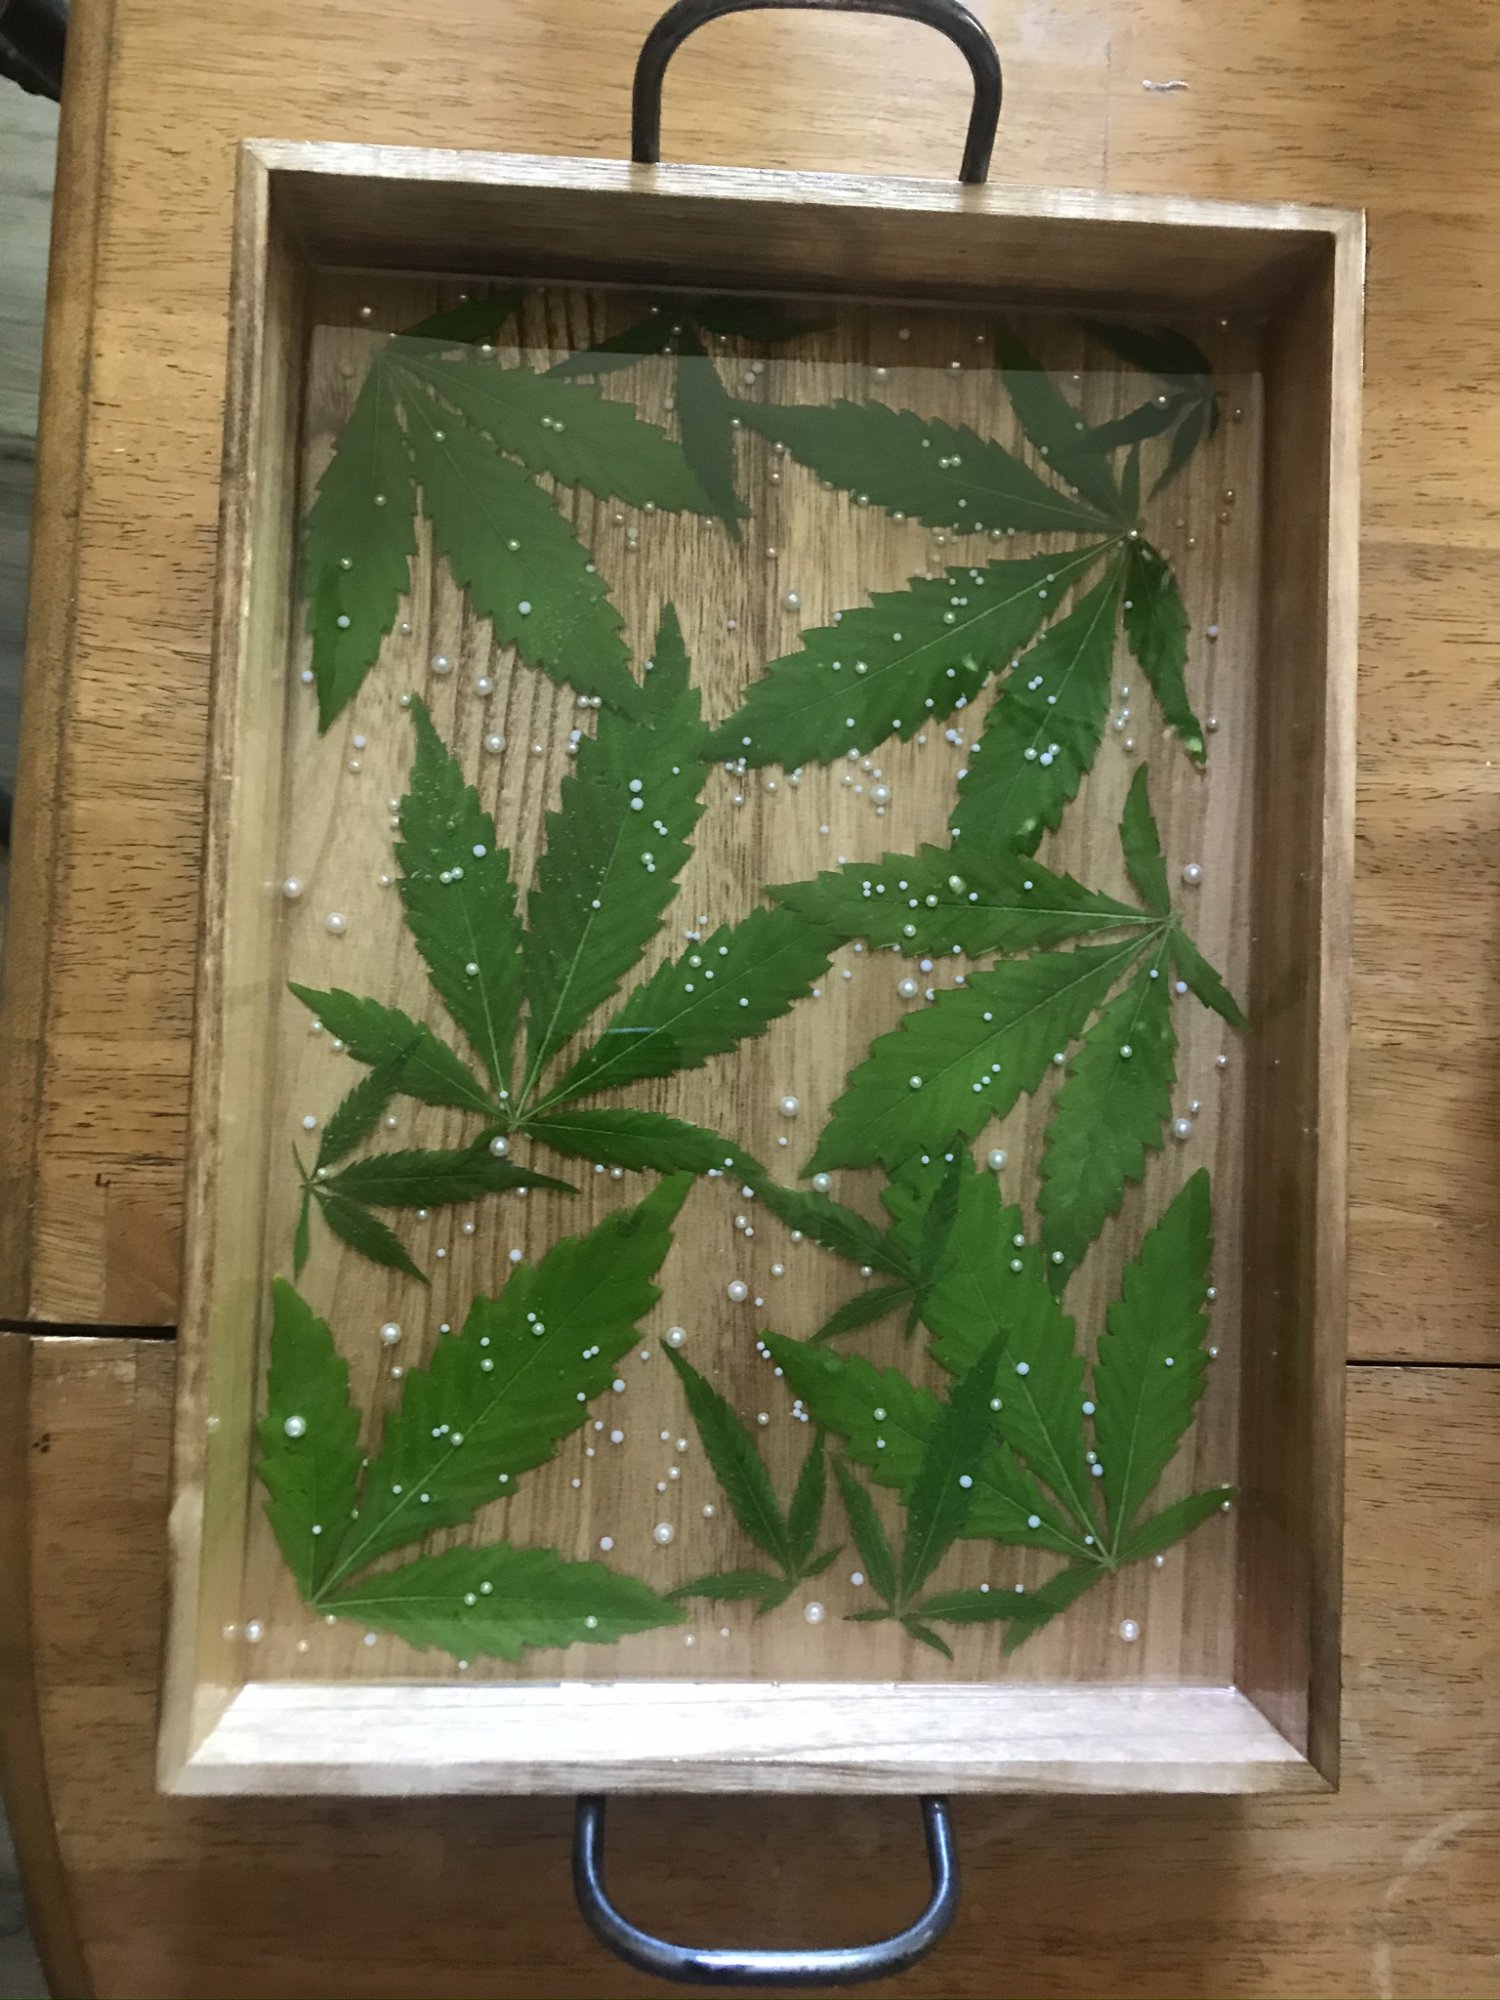 Anyone want a cannabis serving tray